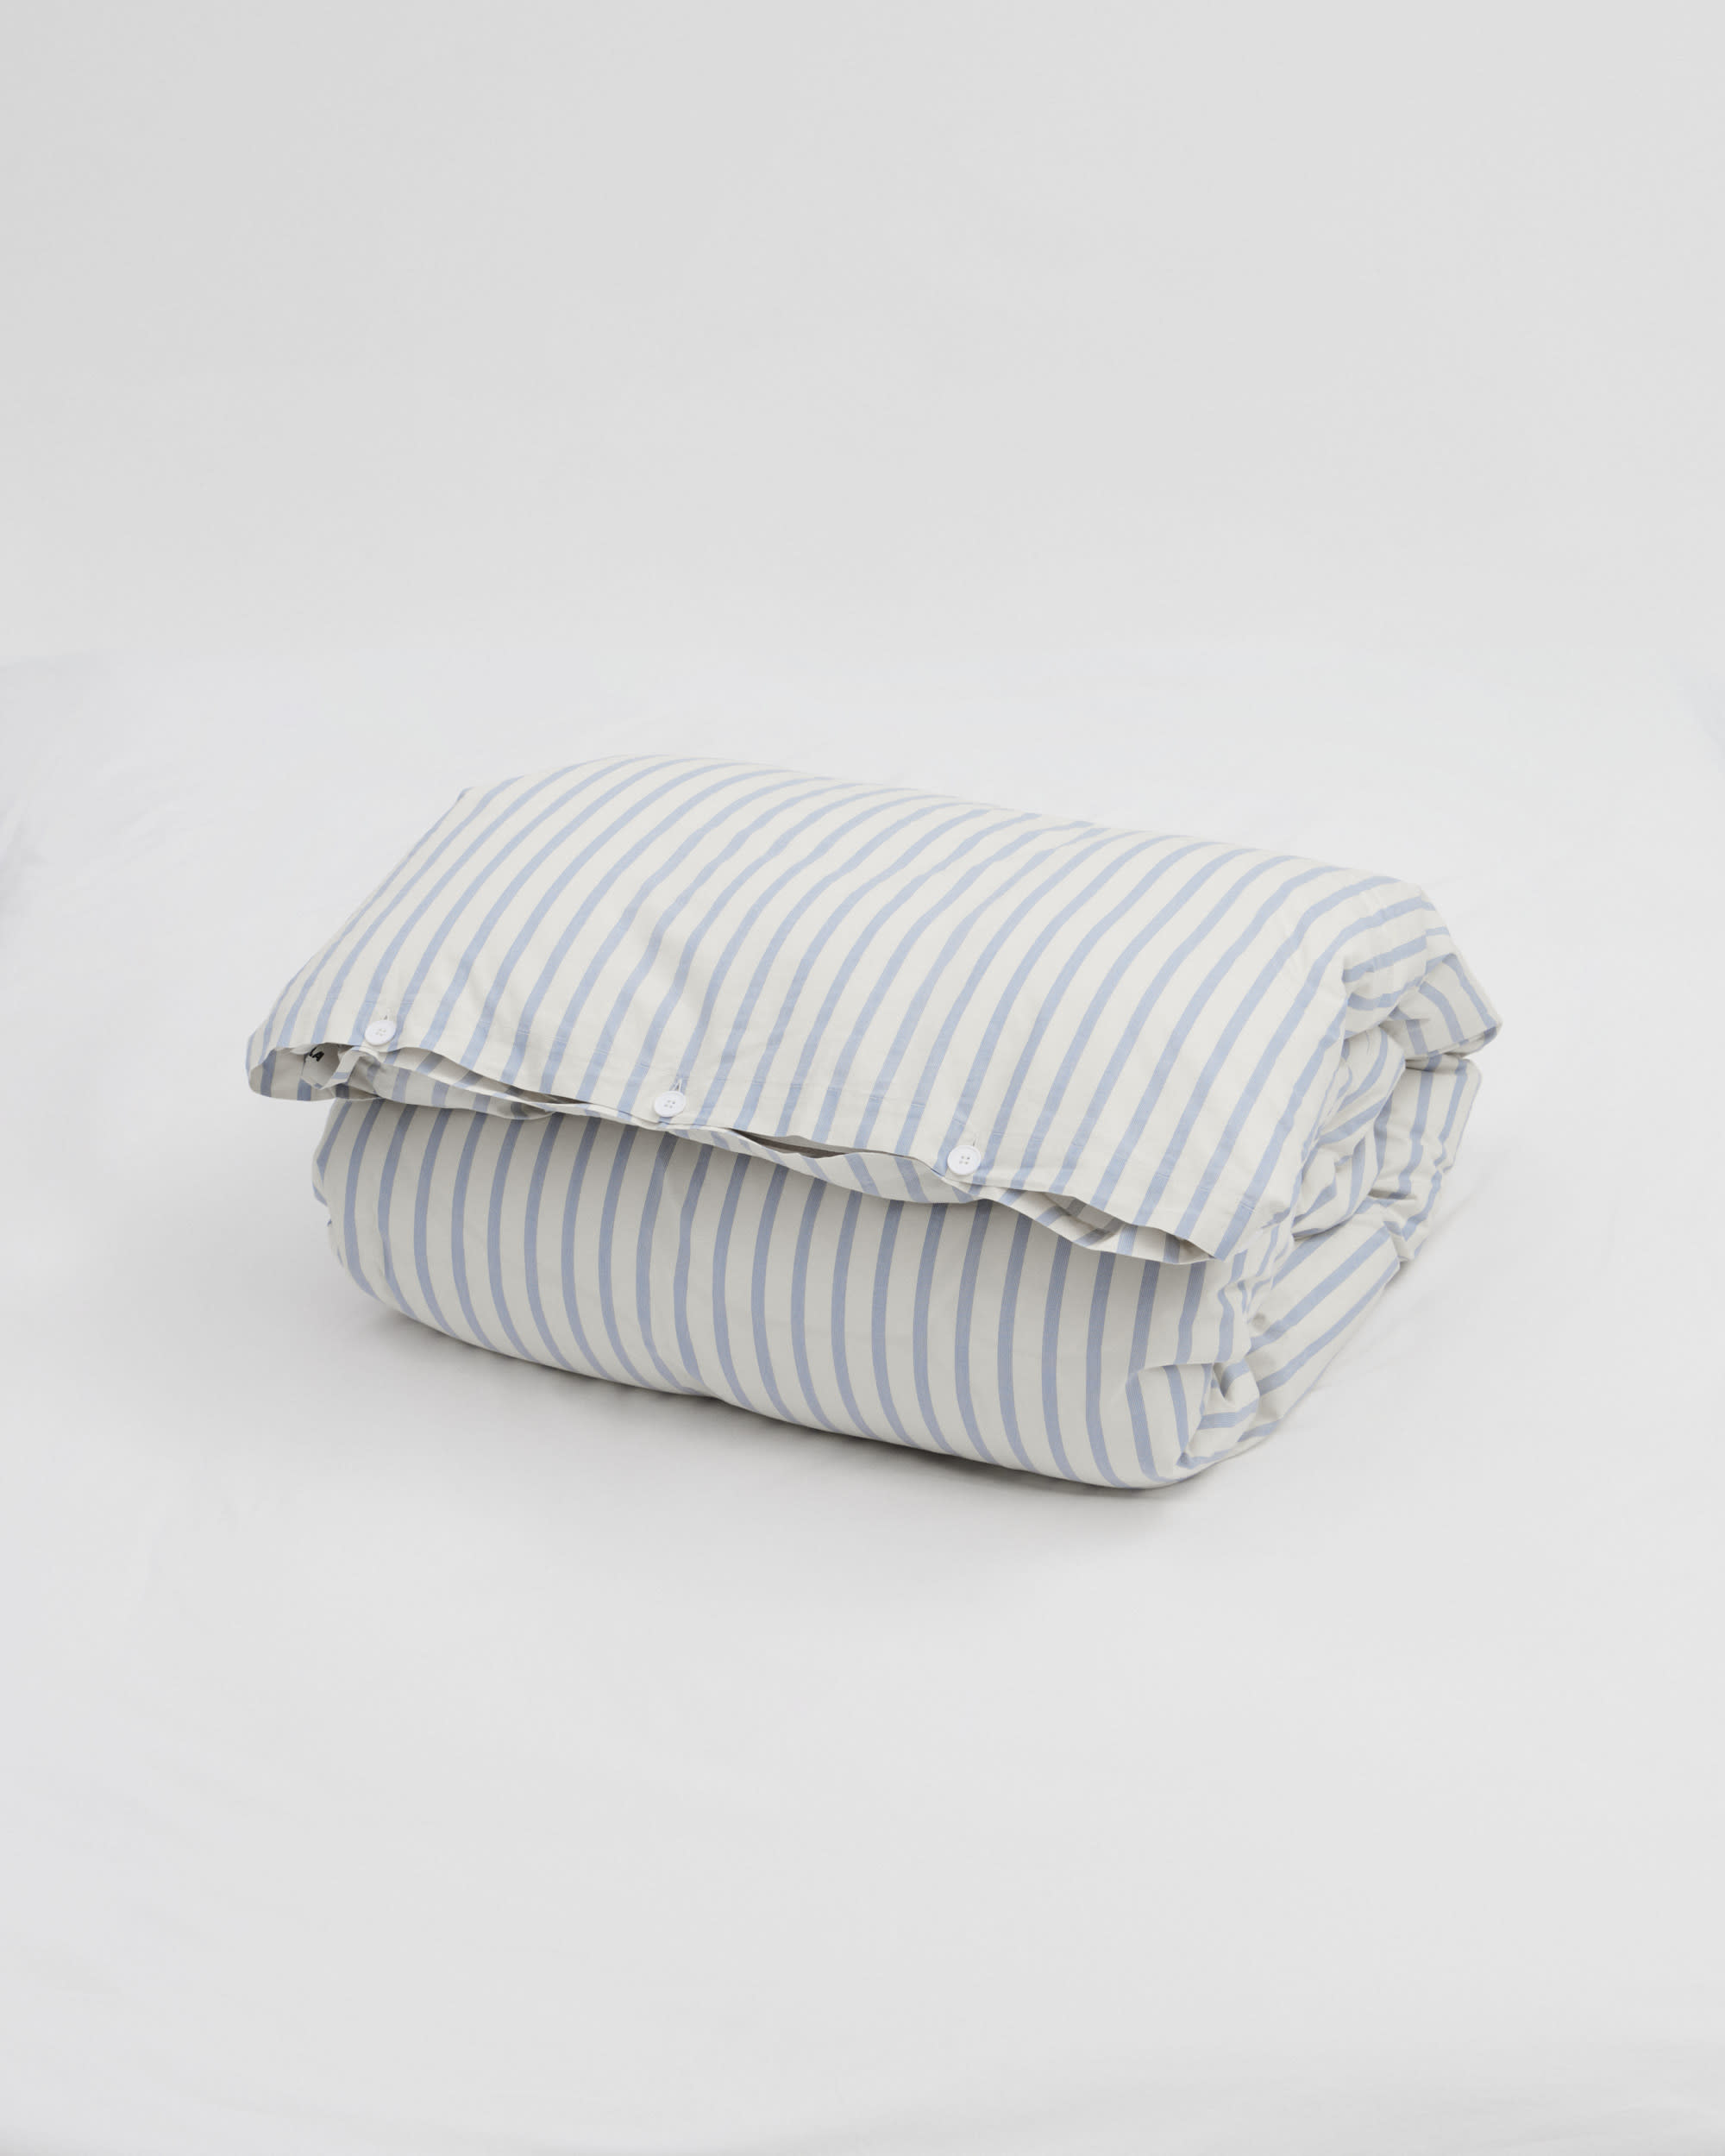 Percale duvet cover – Needle Stripes